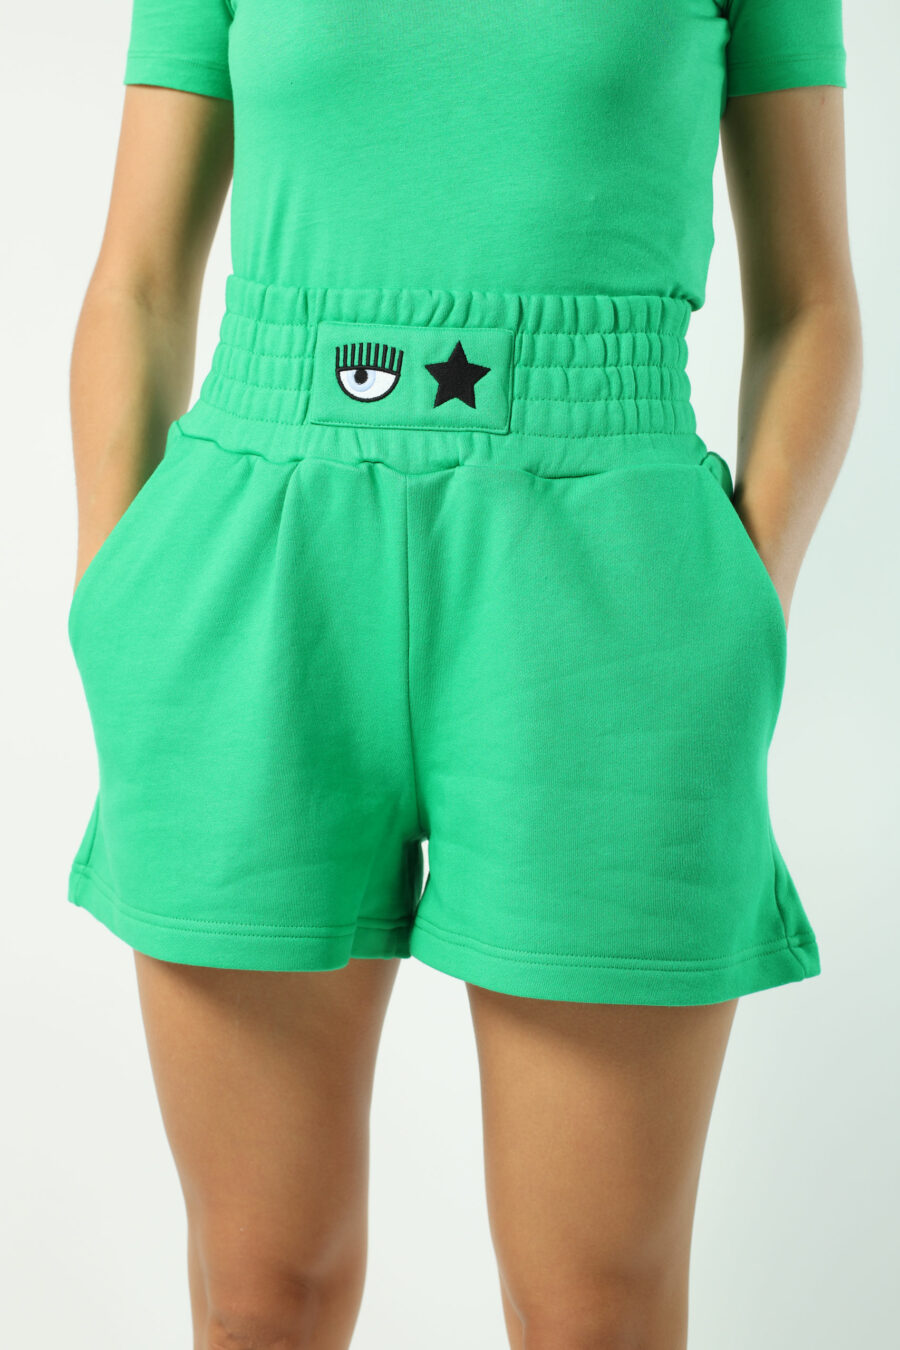 Pantalón de chándal verde corto con logo ojo y estrella - Photos 2579